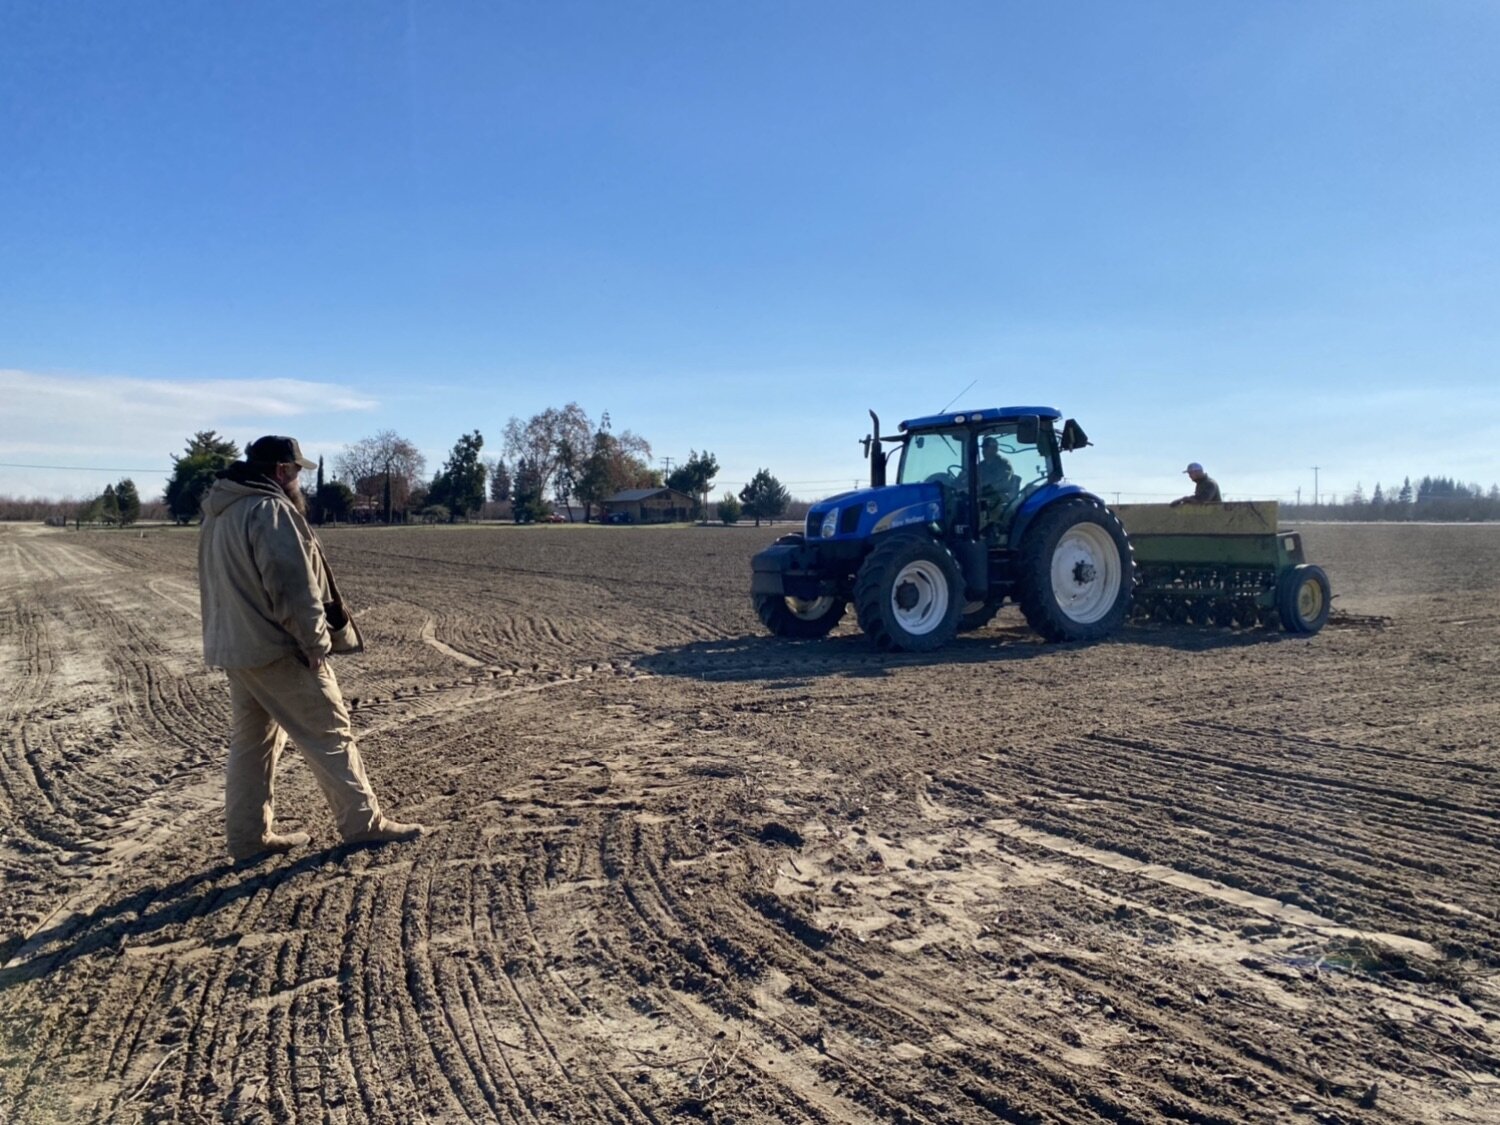  The Ecks planting their first wheat crop - winter 2020.  